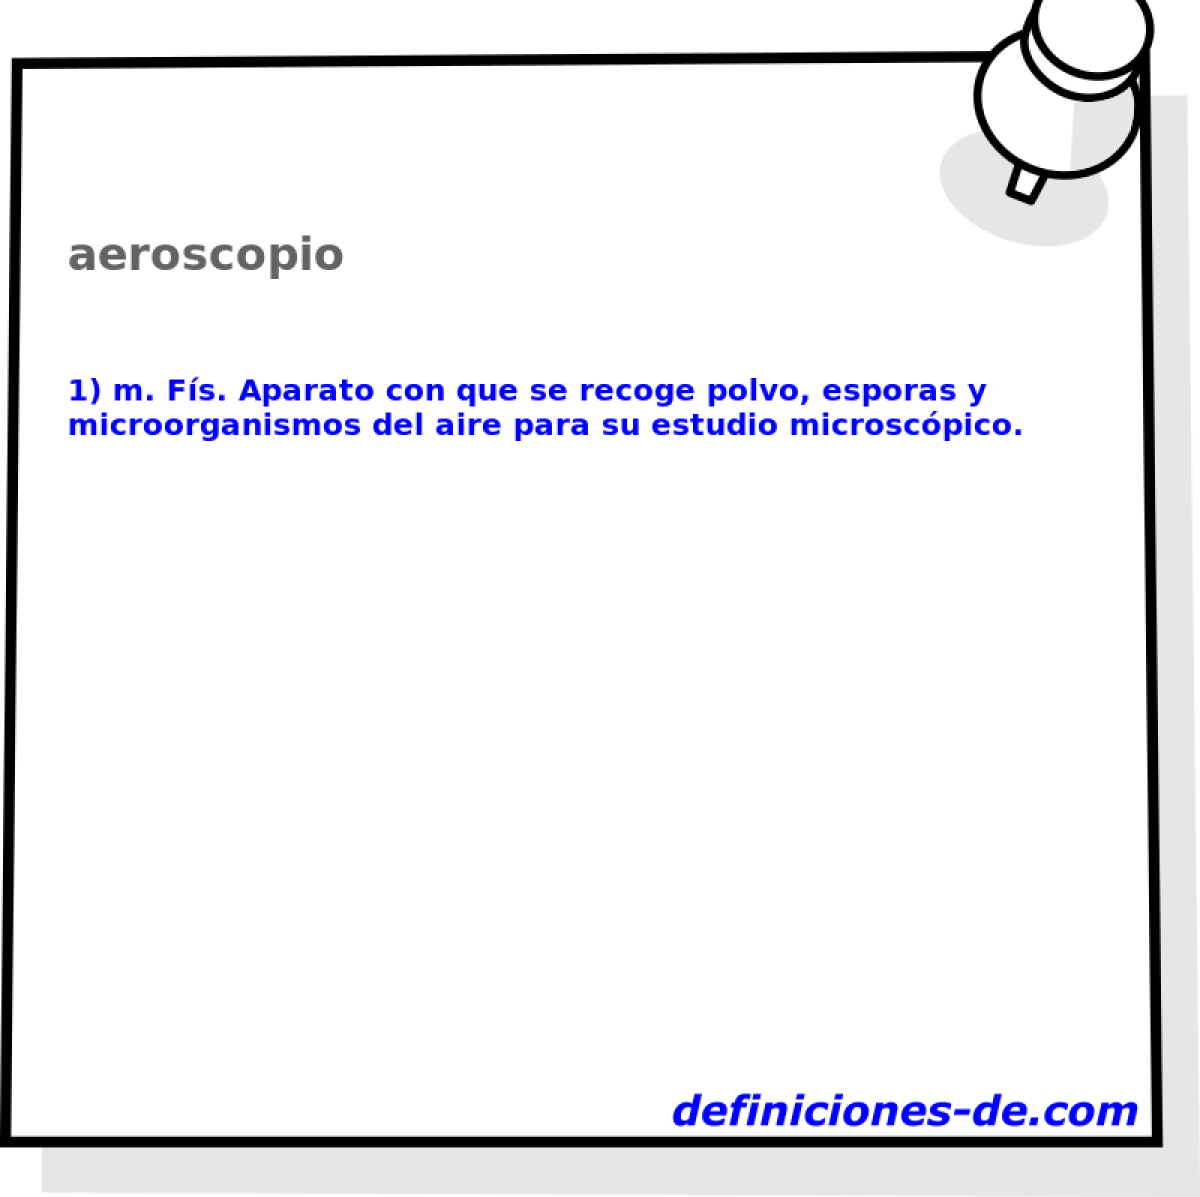 aeroscopio 